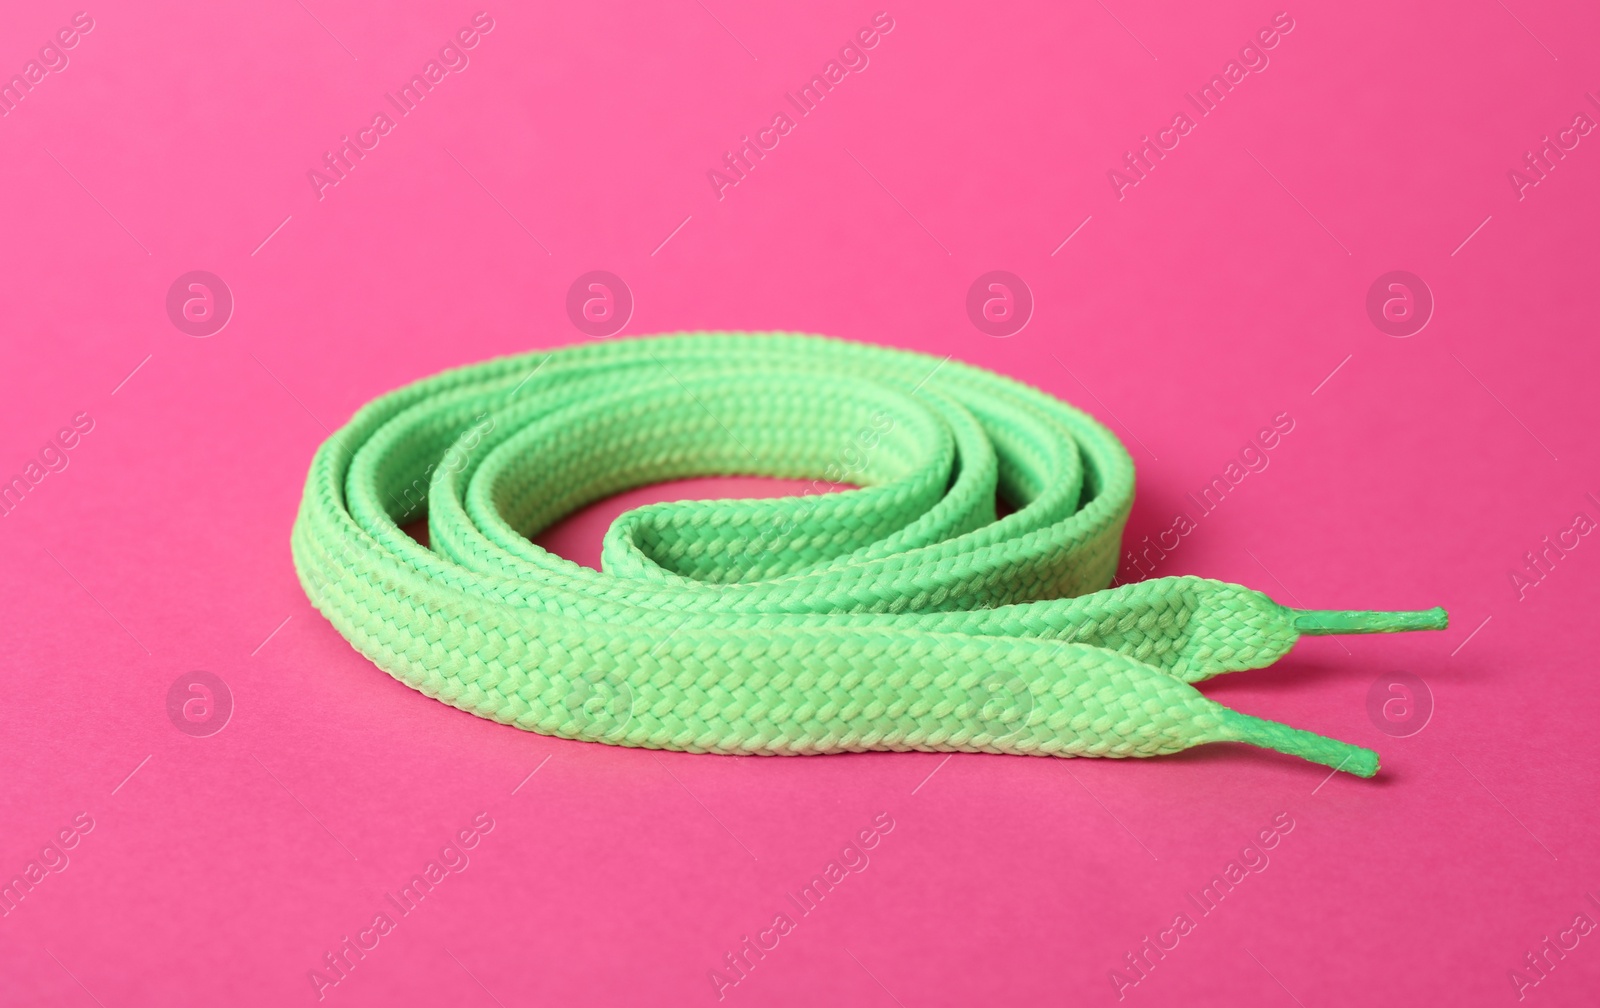 Photo of Mint shoe lace on pink background. Stylish accessory